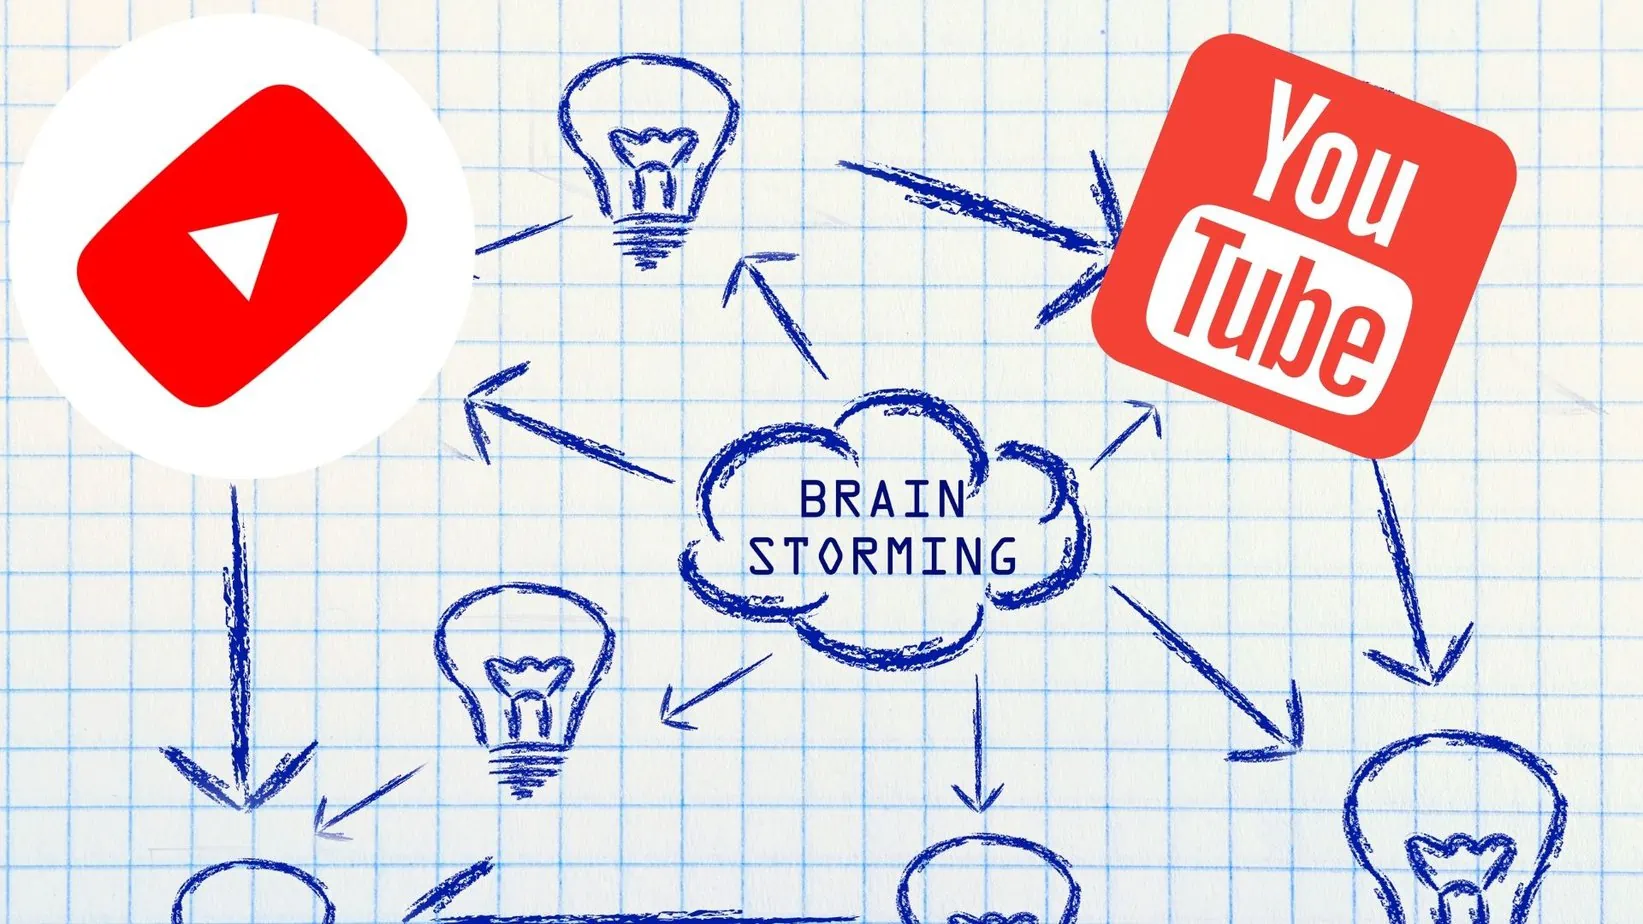 brainstorm youtube ideas